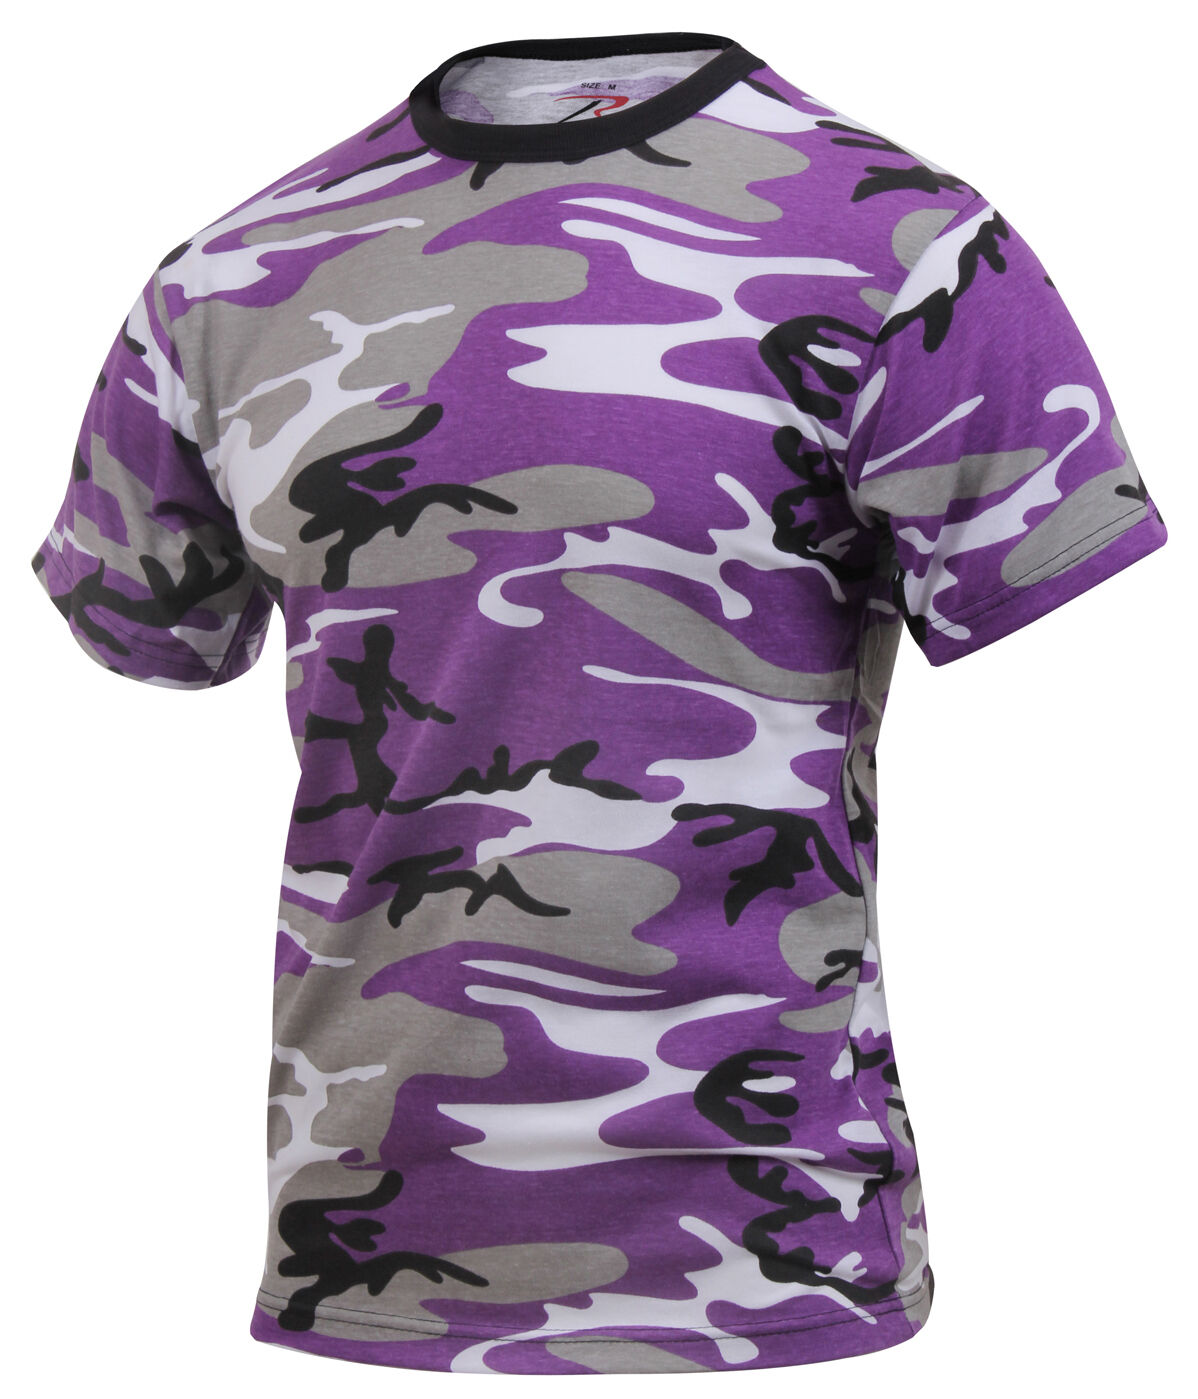 Rothco Color Camo T-Shirts - Ultra Violet Camo